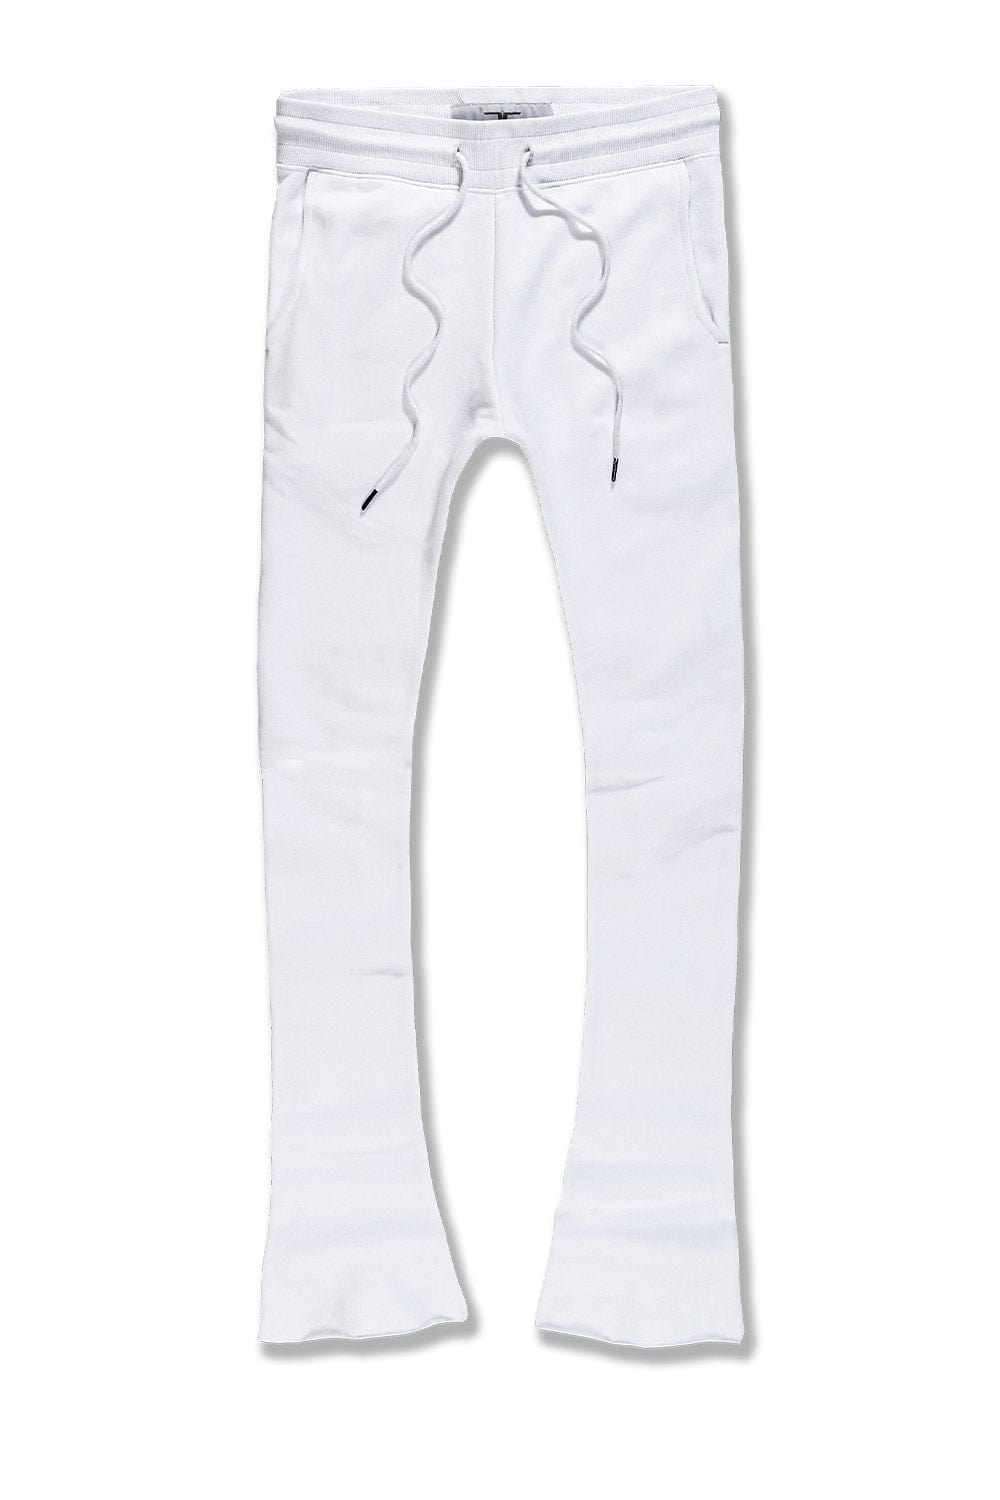 Jordan Craig Uptown Stacked Sweatpants (Spring Sale Edition) White / S